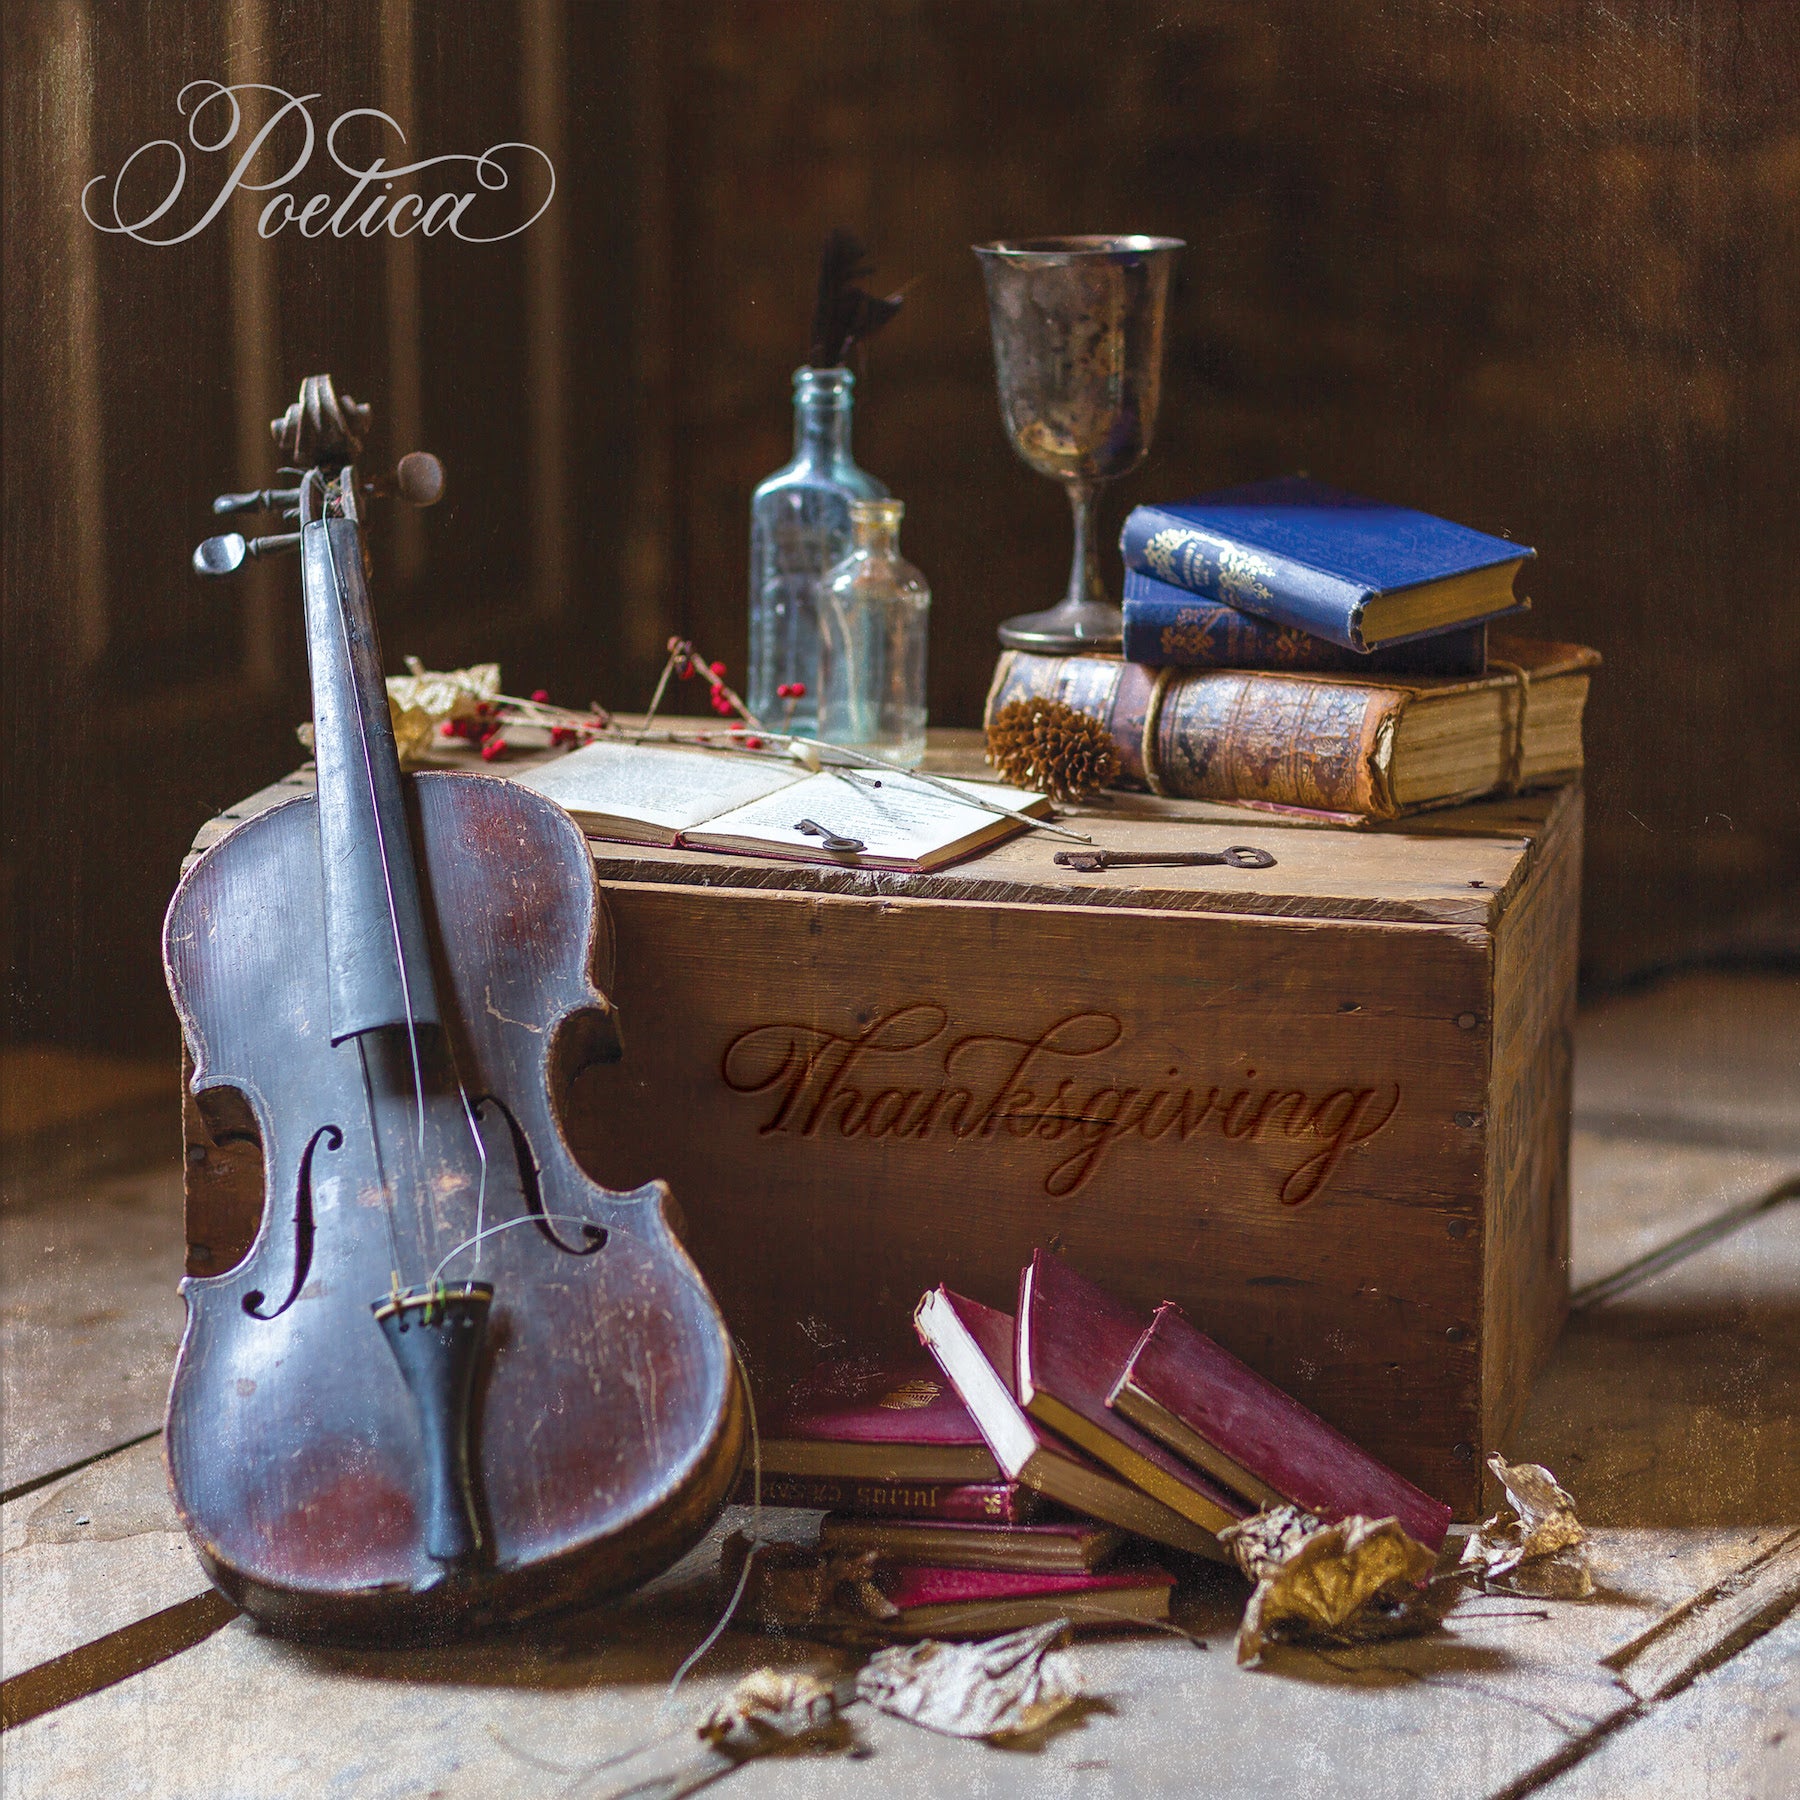 Poetica – ‘Thanksgiving’